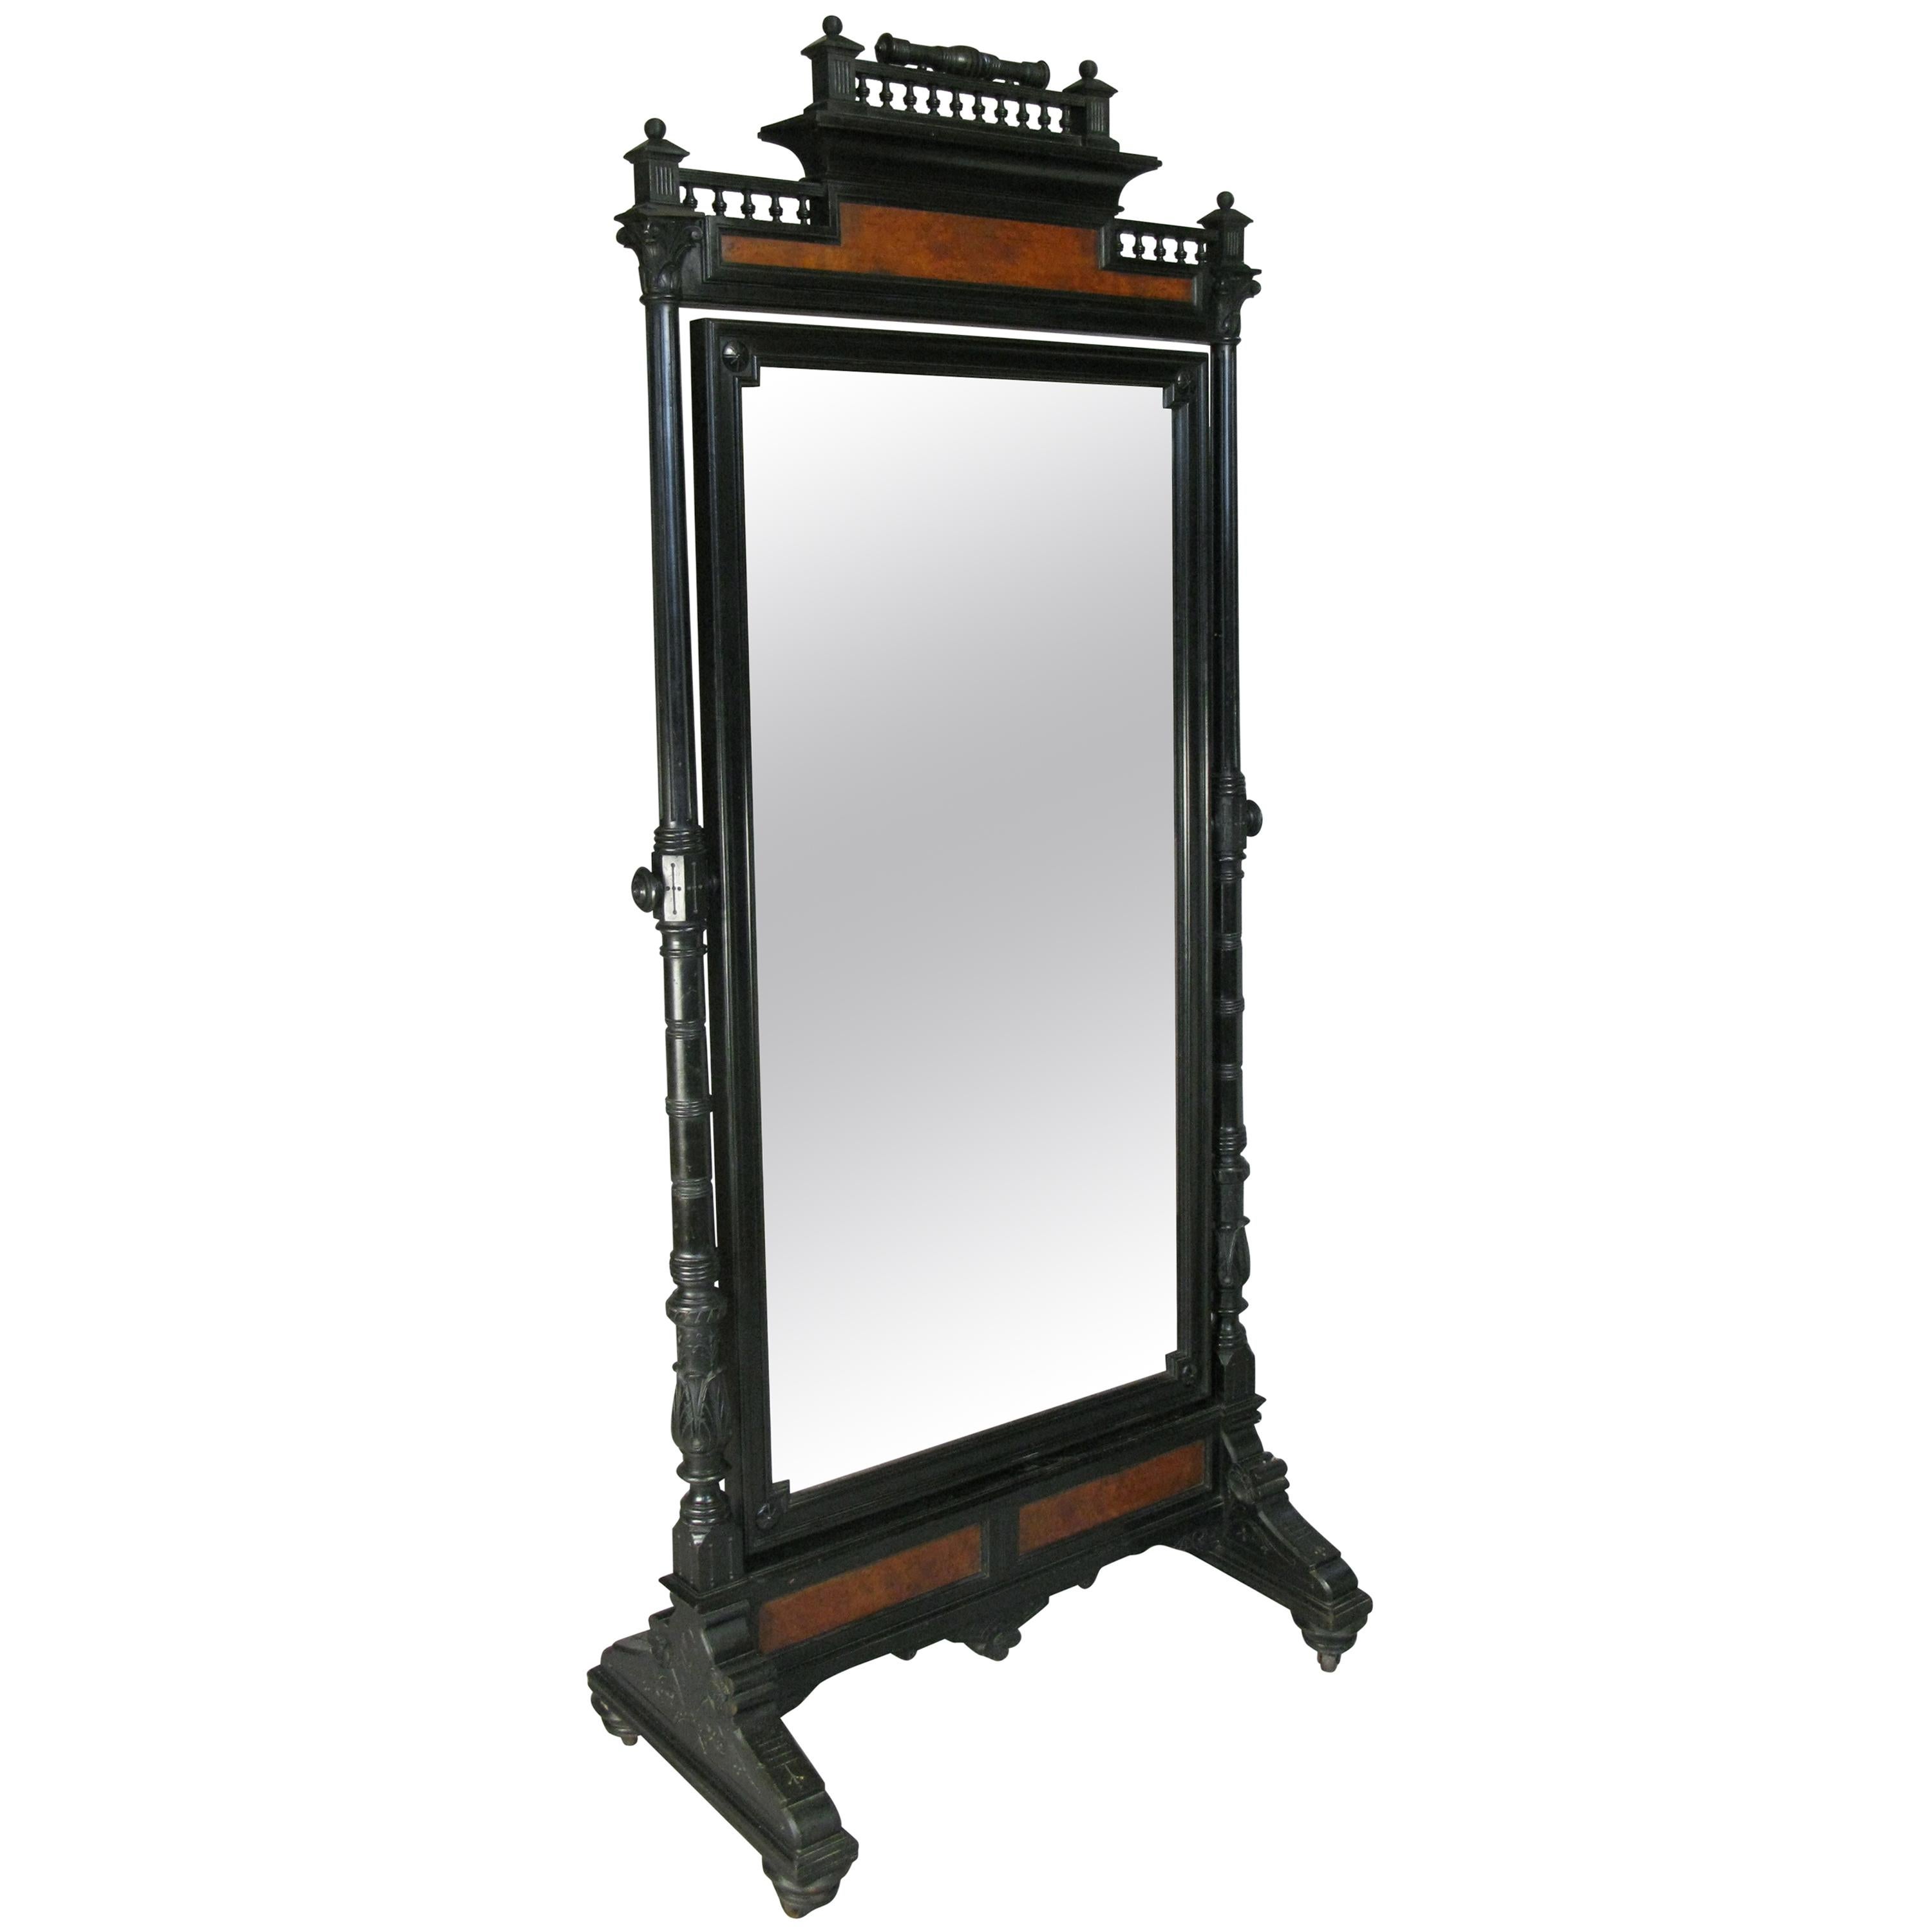 Antique 19th Century Ebonized and Burled Cheval Mirror